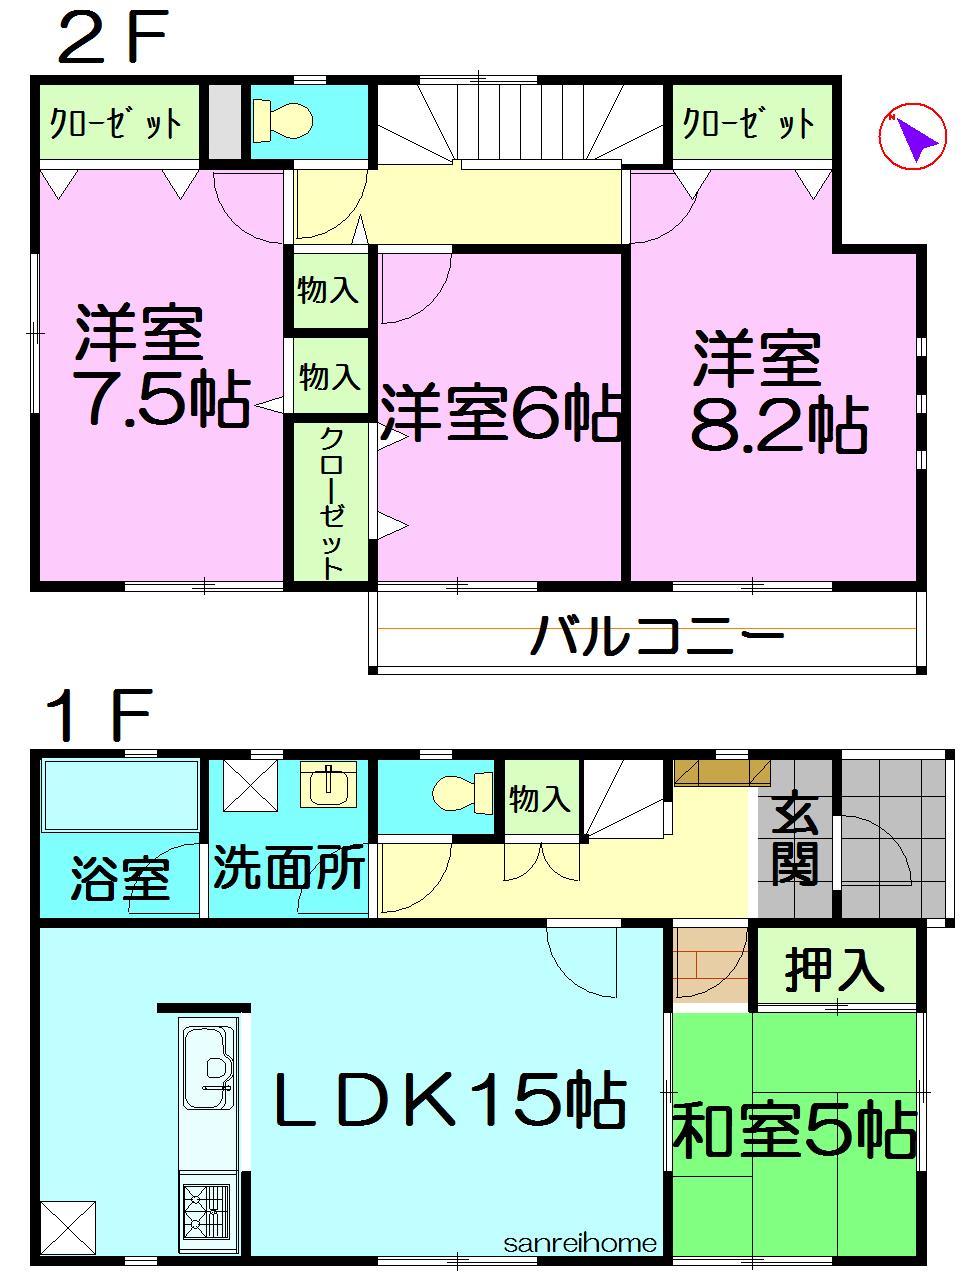 Floor plan. (1 Building), Price 20,900,000 yen, 4LDK, Land area 183.82 sq m , Building area 98.01 sq m